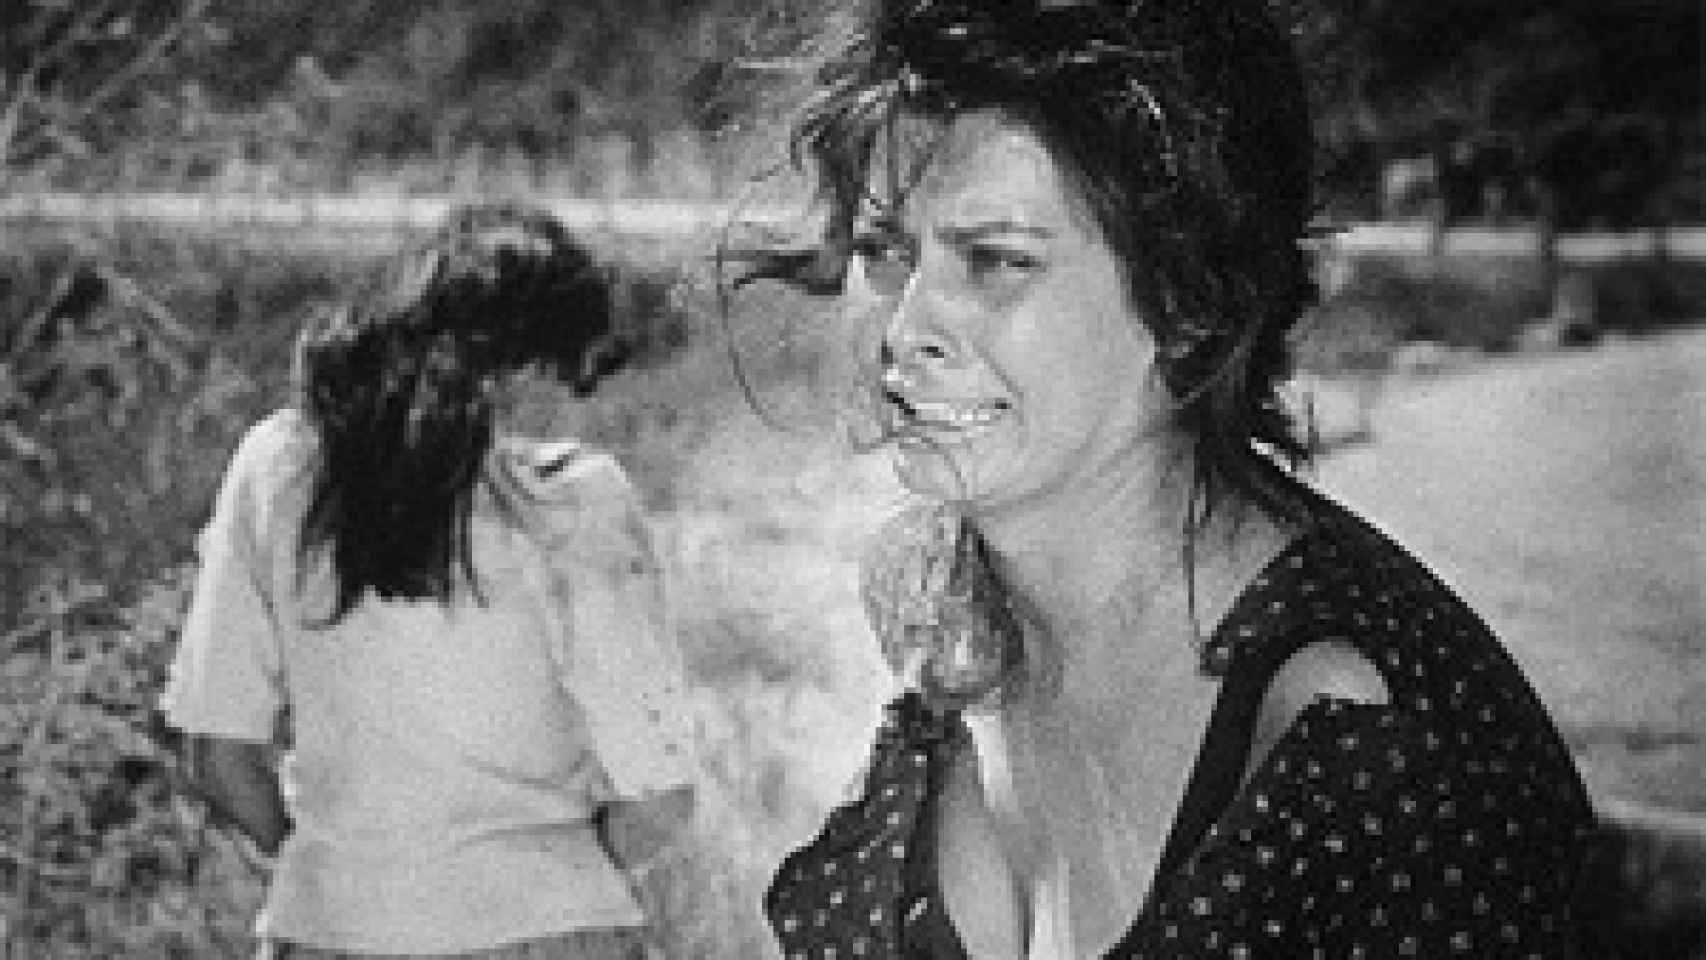 Image: Sophia Loren, una vida de novela